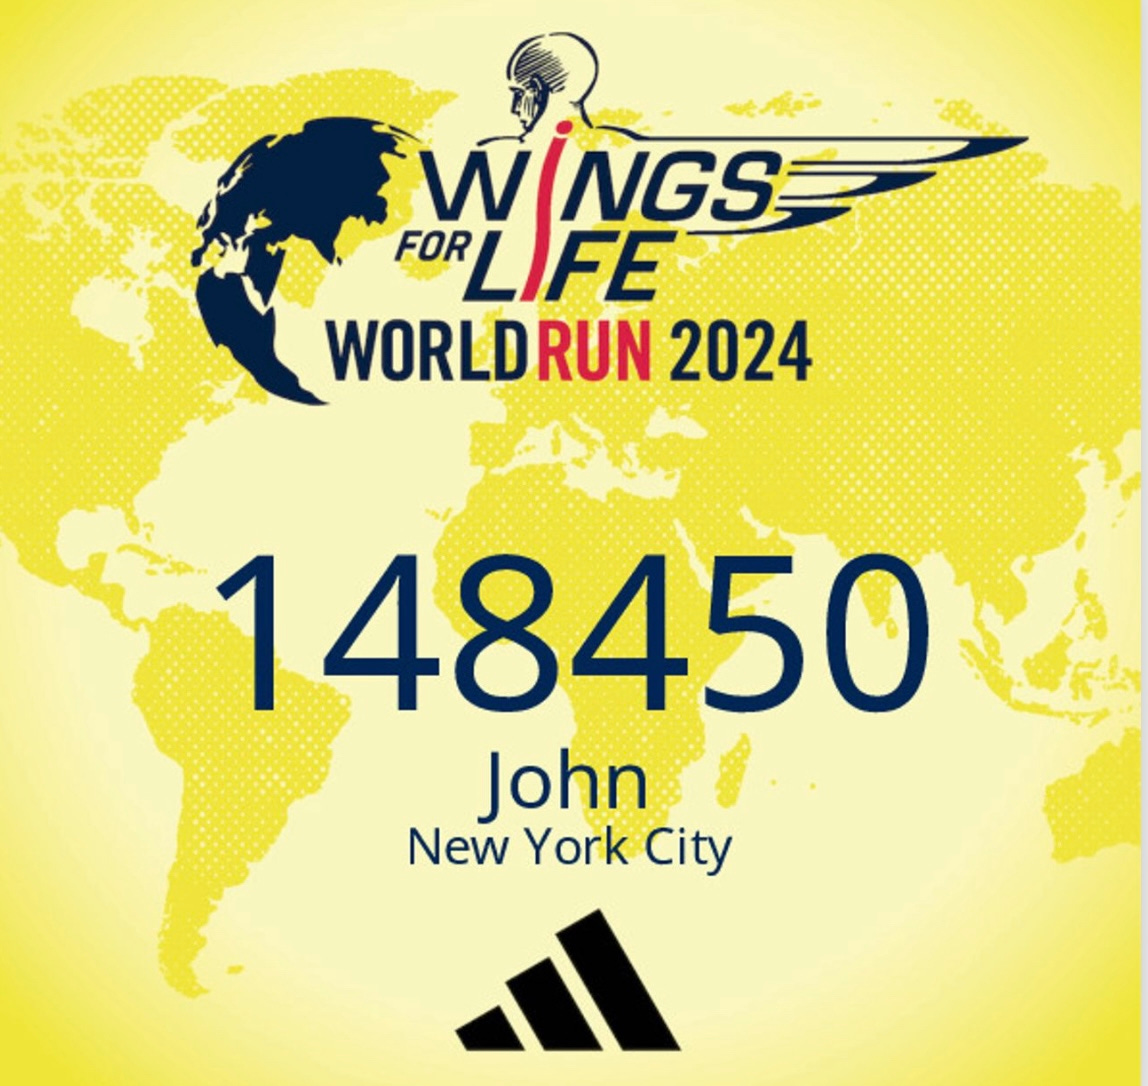 Race bib for 2024 New York City Wings for Life World Run. 